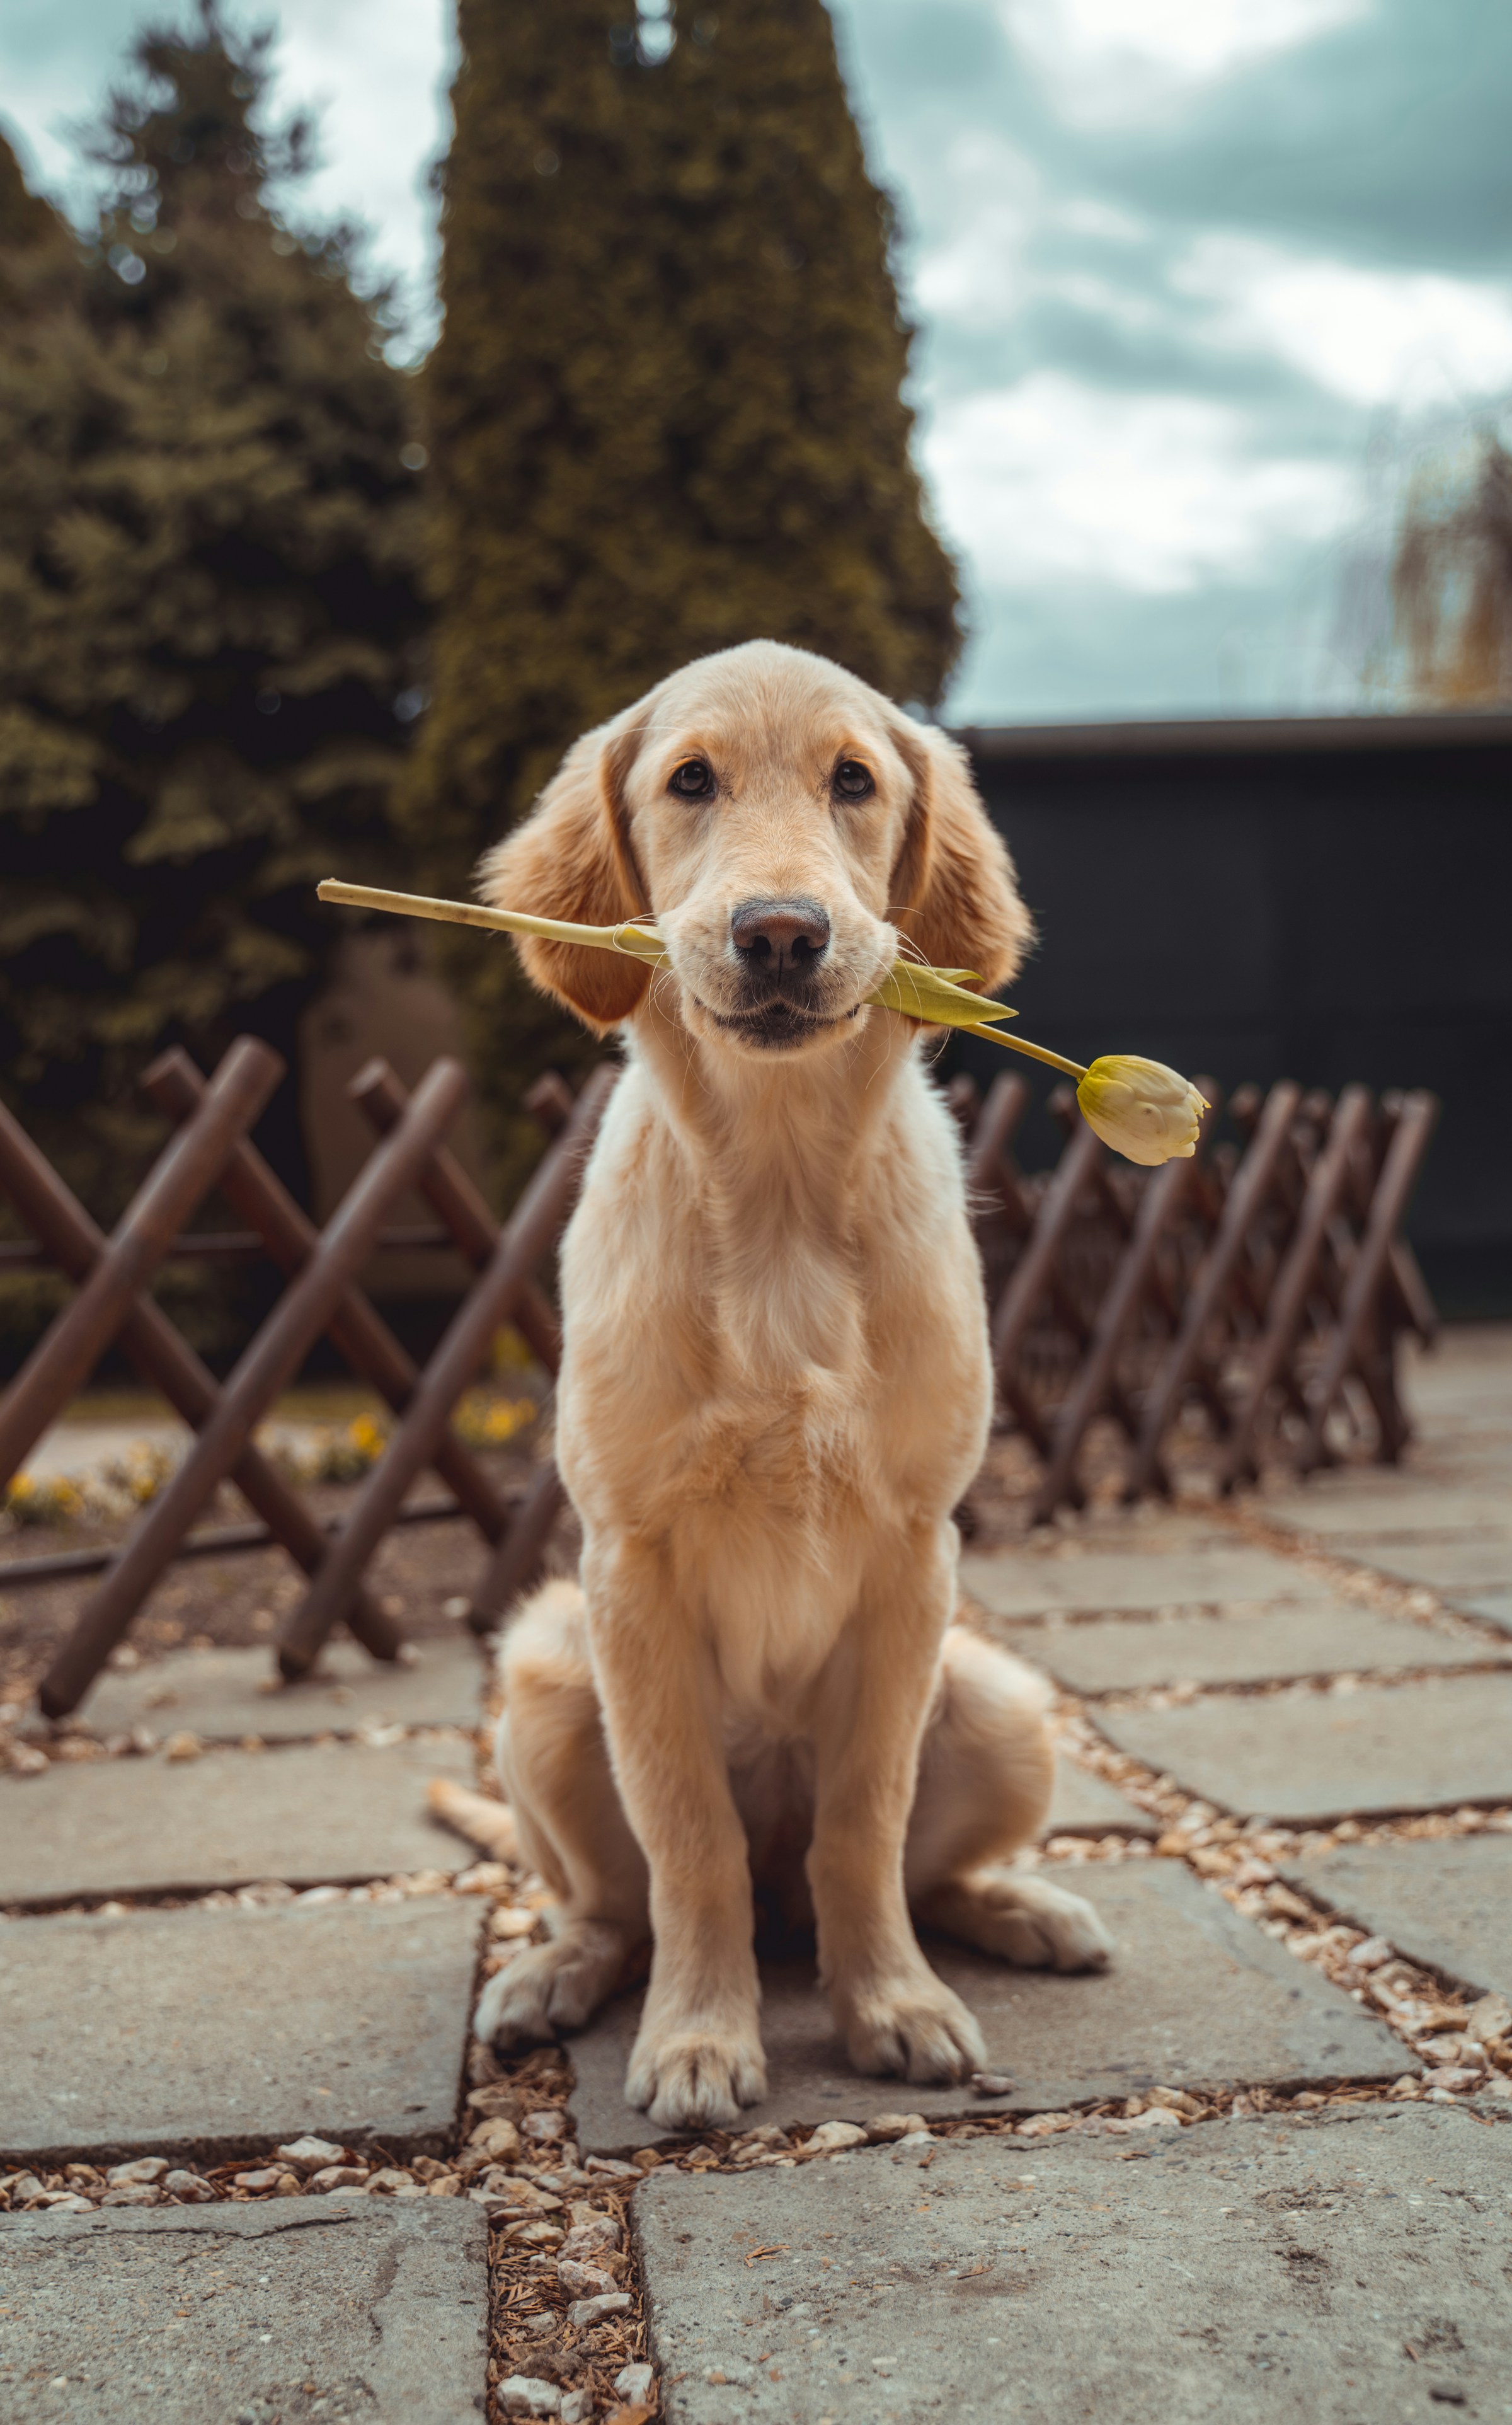 A dog holding a flower | Source: Unsplash